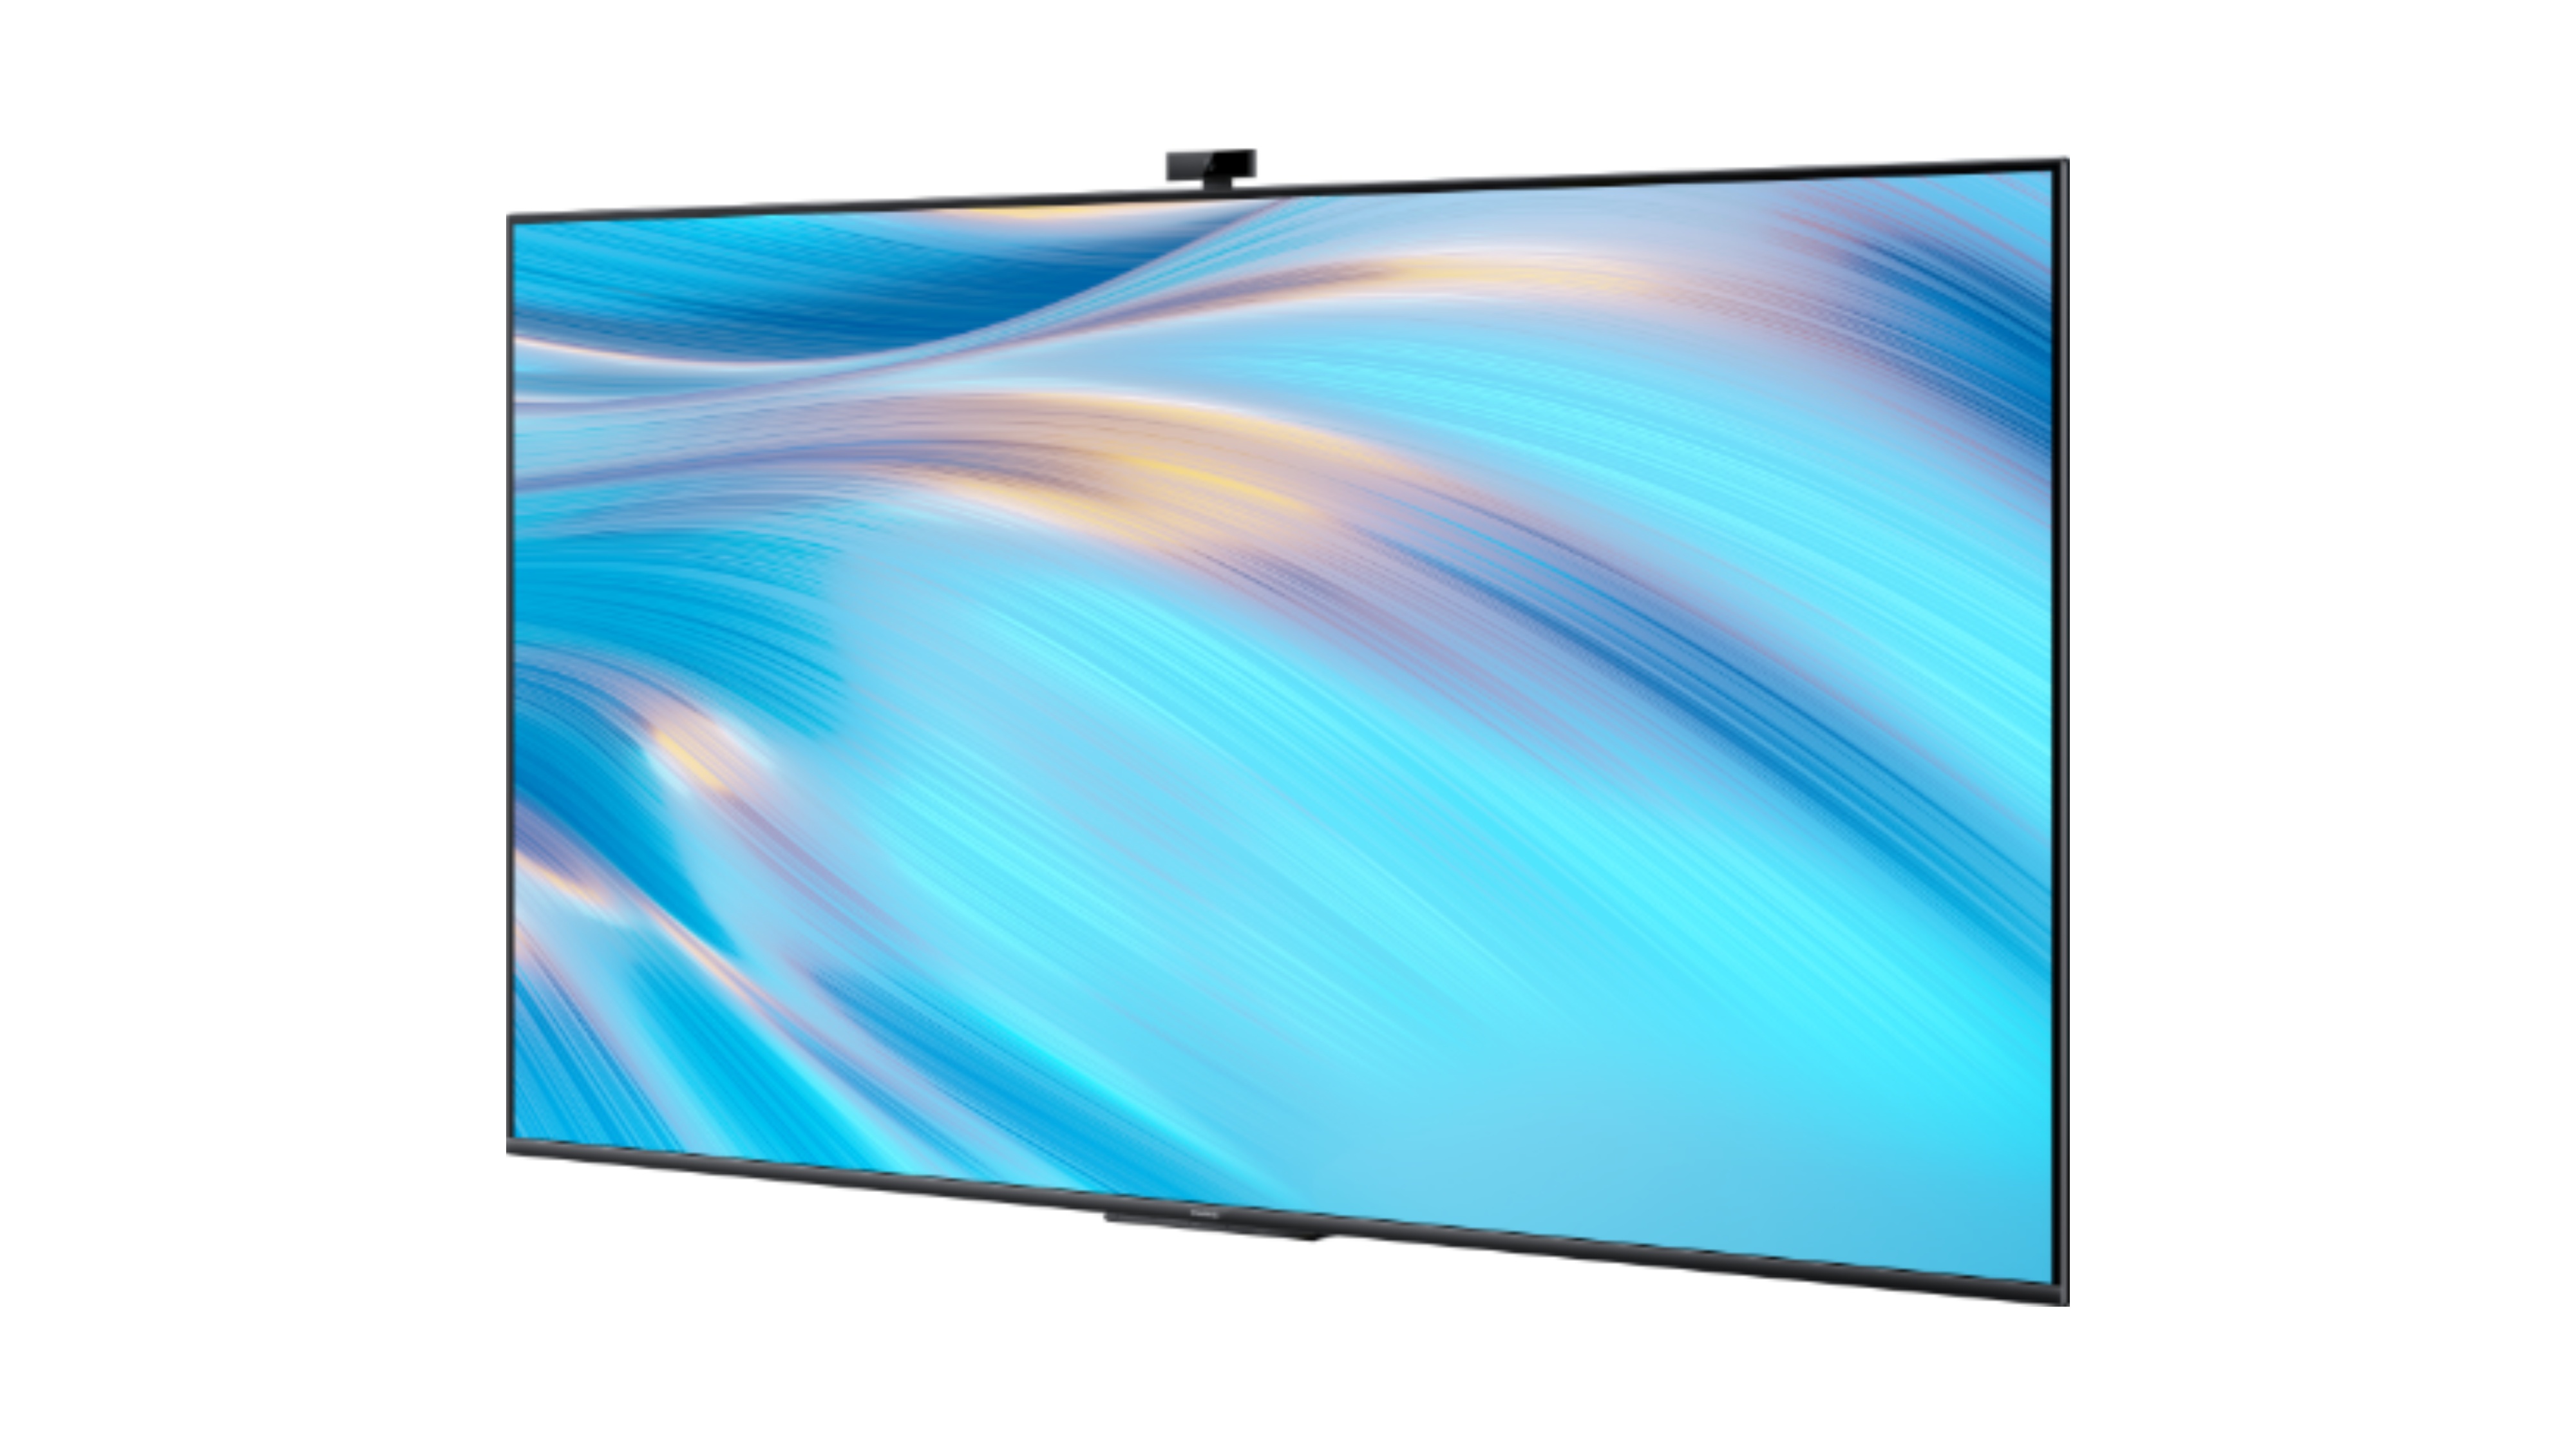 Huawei Smart Screen S Pro 65-inch Featured